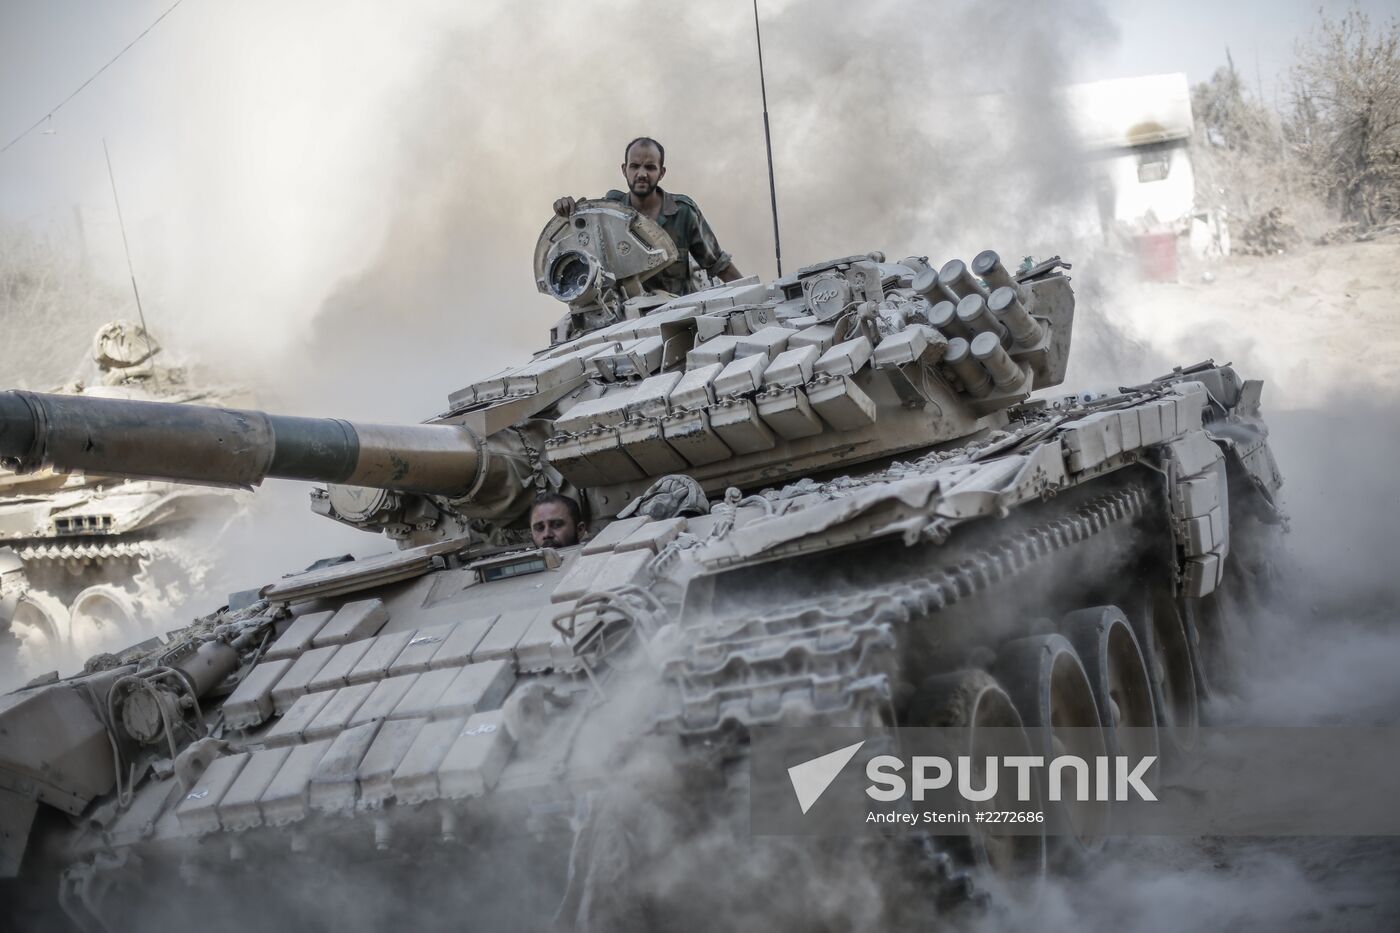 Syrian Army in Damascus surburb